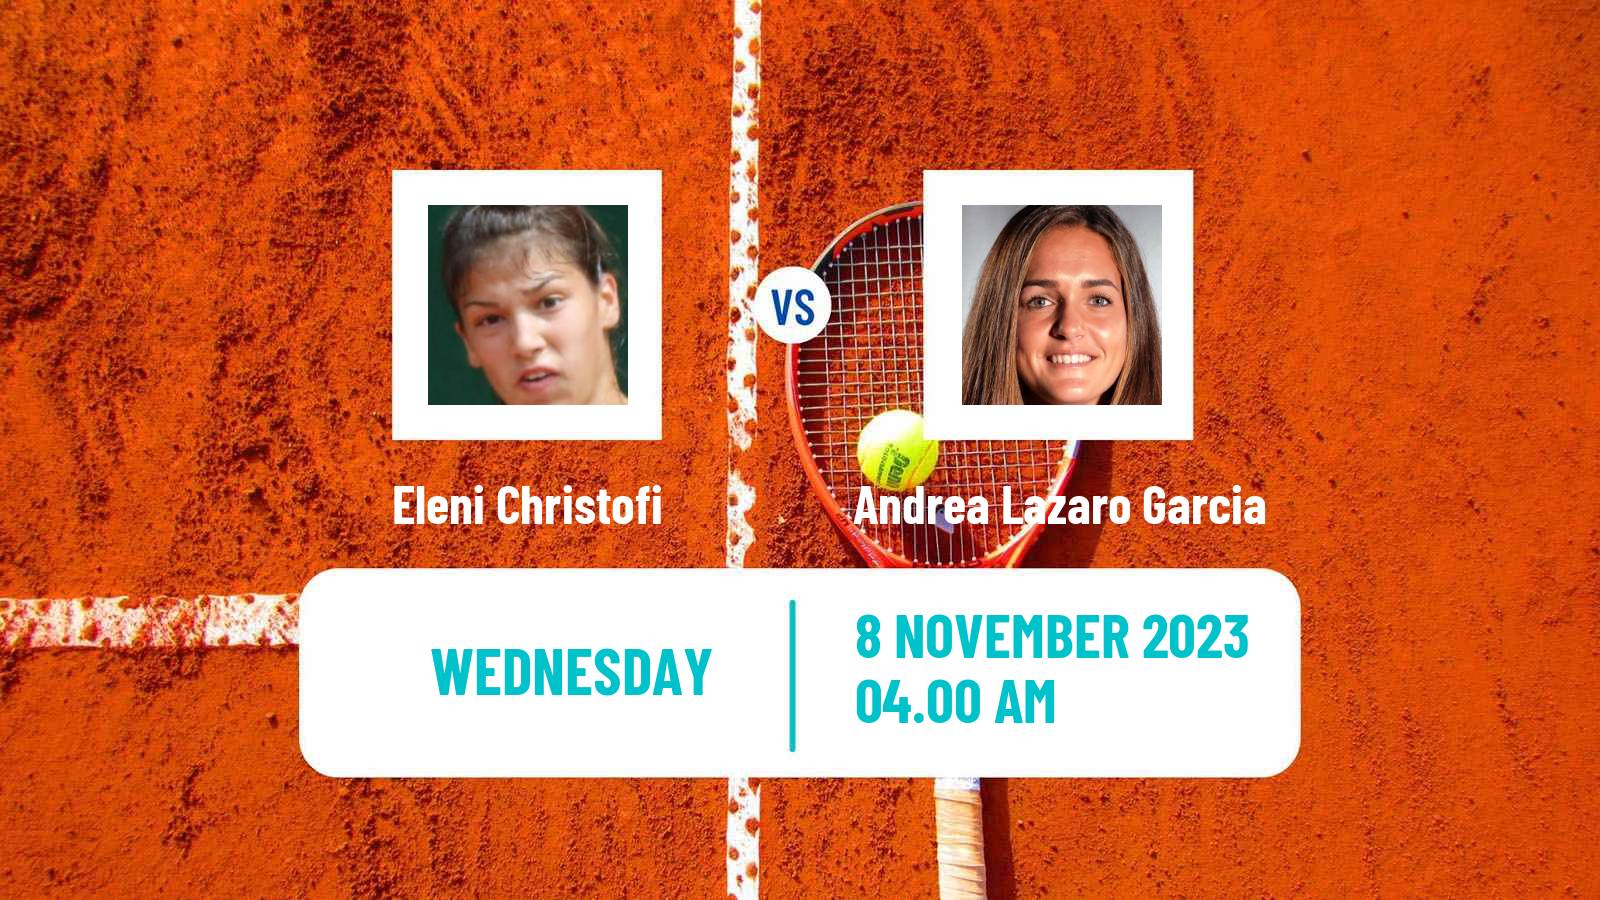 Tennis ITF W40 Heraklion 2 Women Eleni Christofi - Andrea Lazaro Garcia